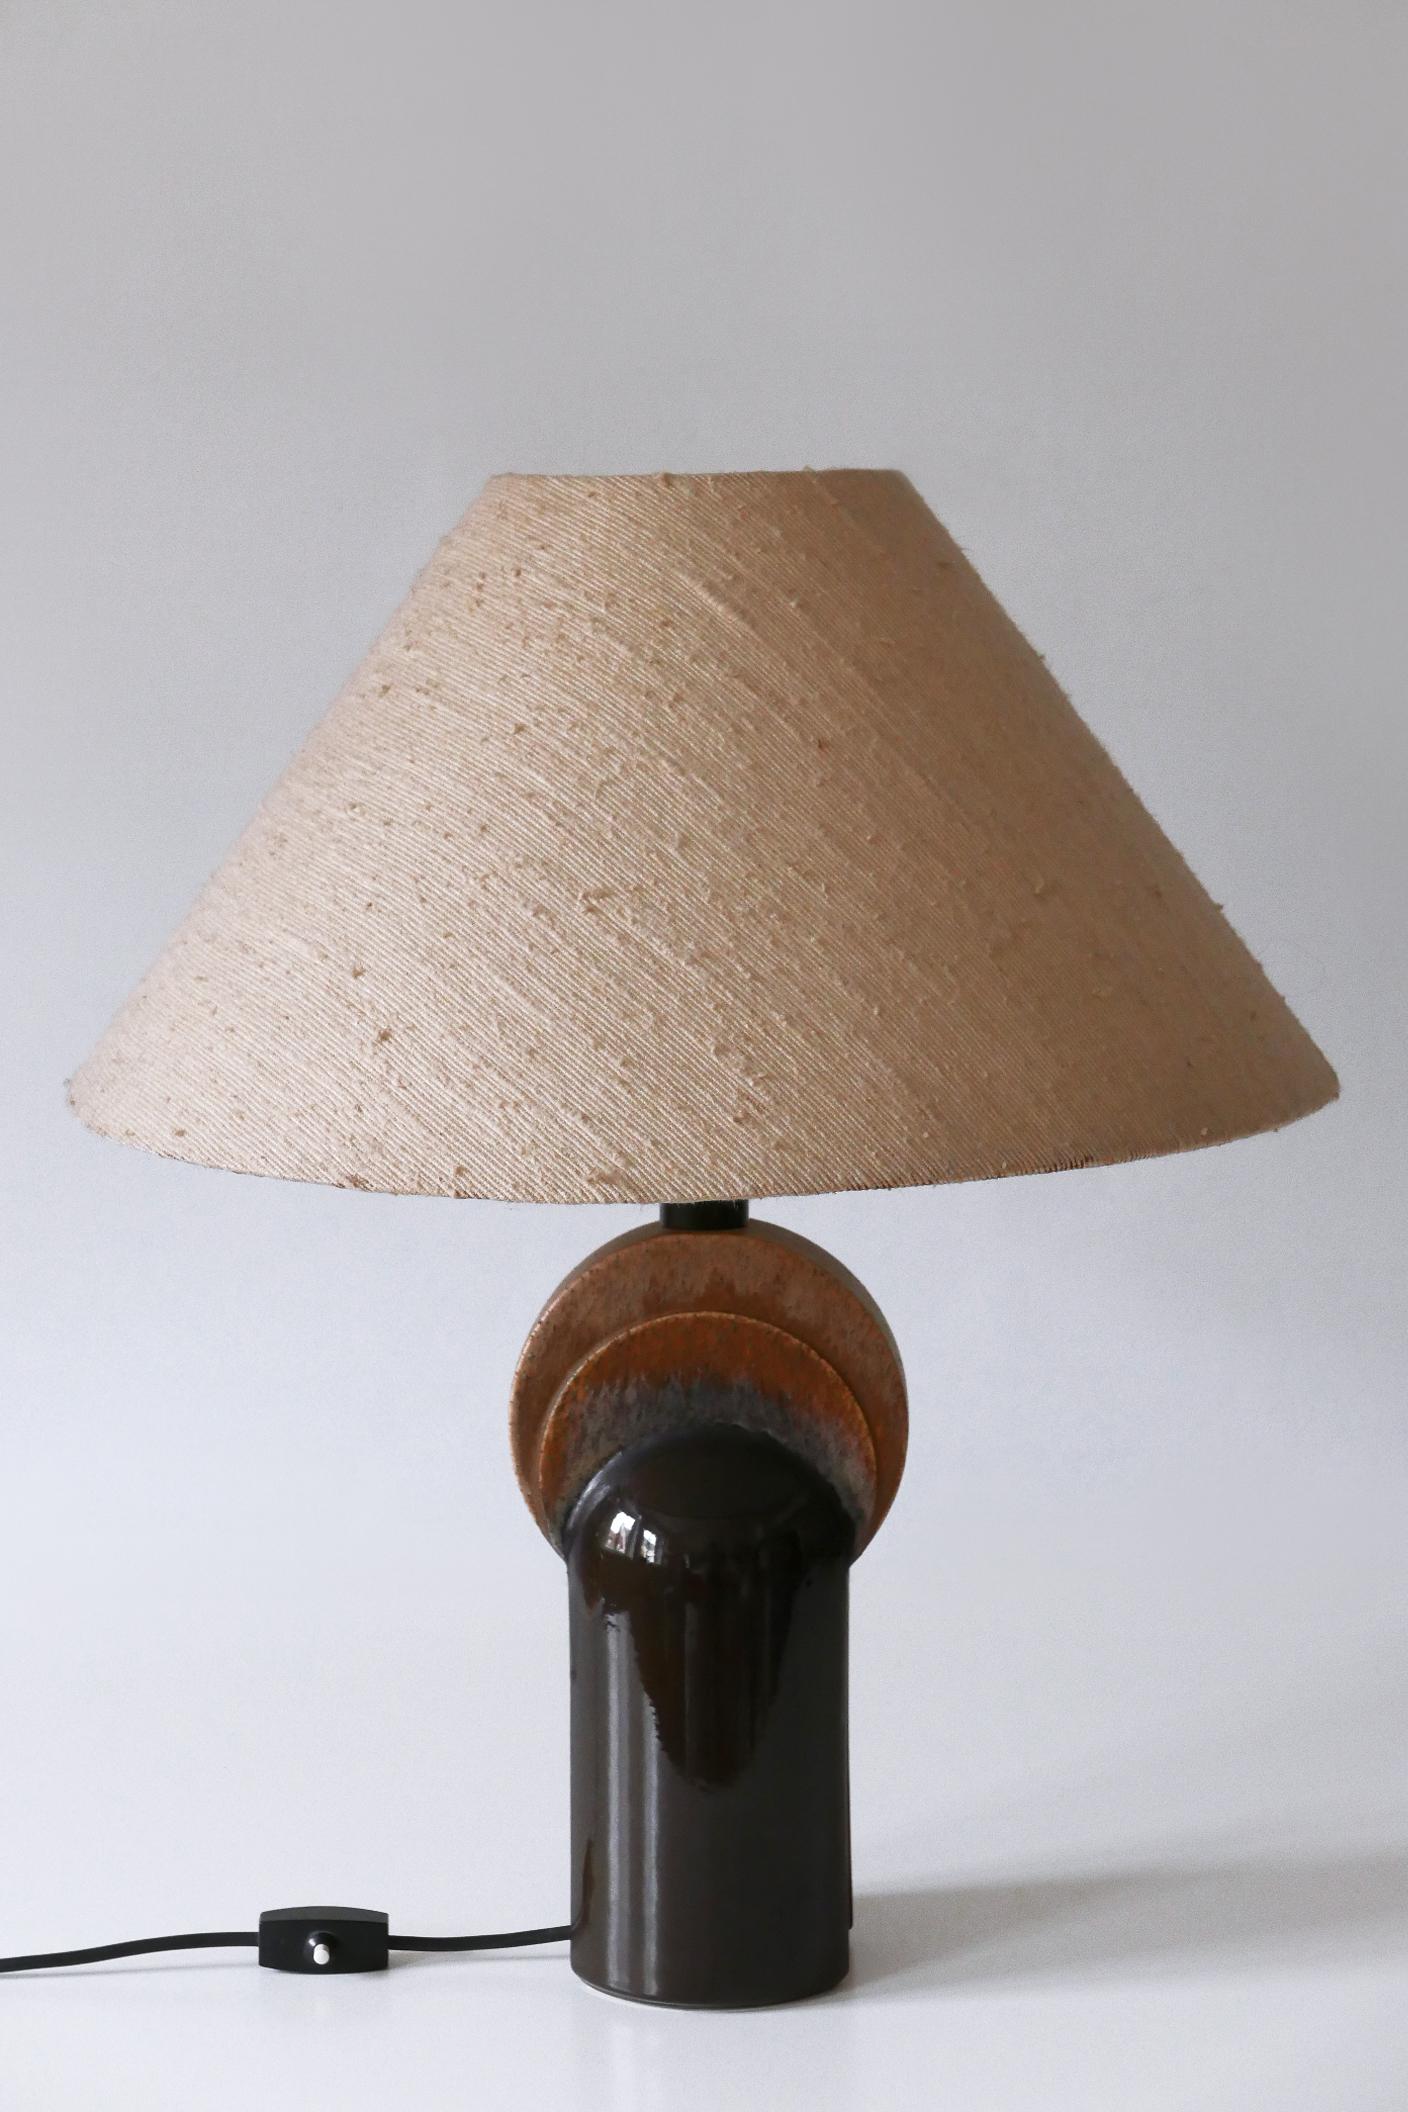 Elegant Mid-Century Modern Ceramic Table Lamp by Leola Design Germany 1960s For Sale 6